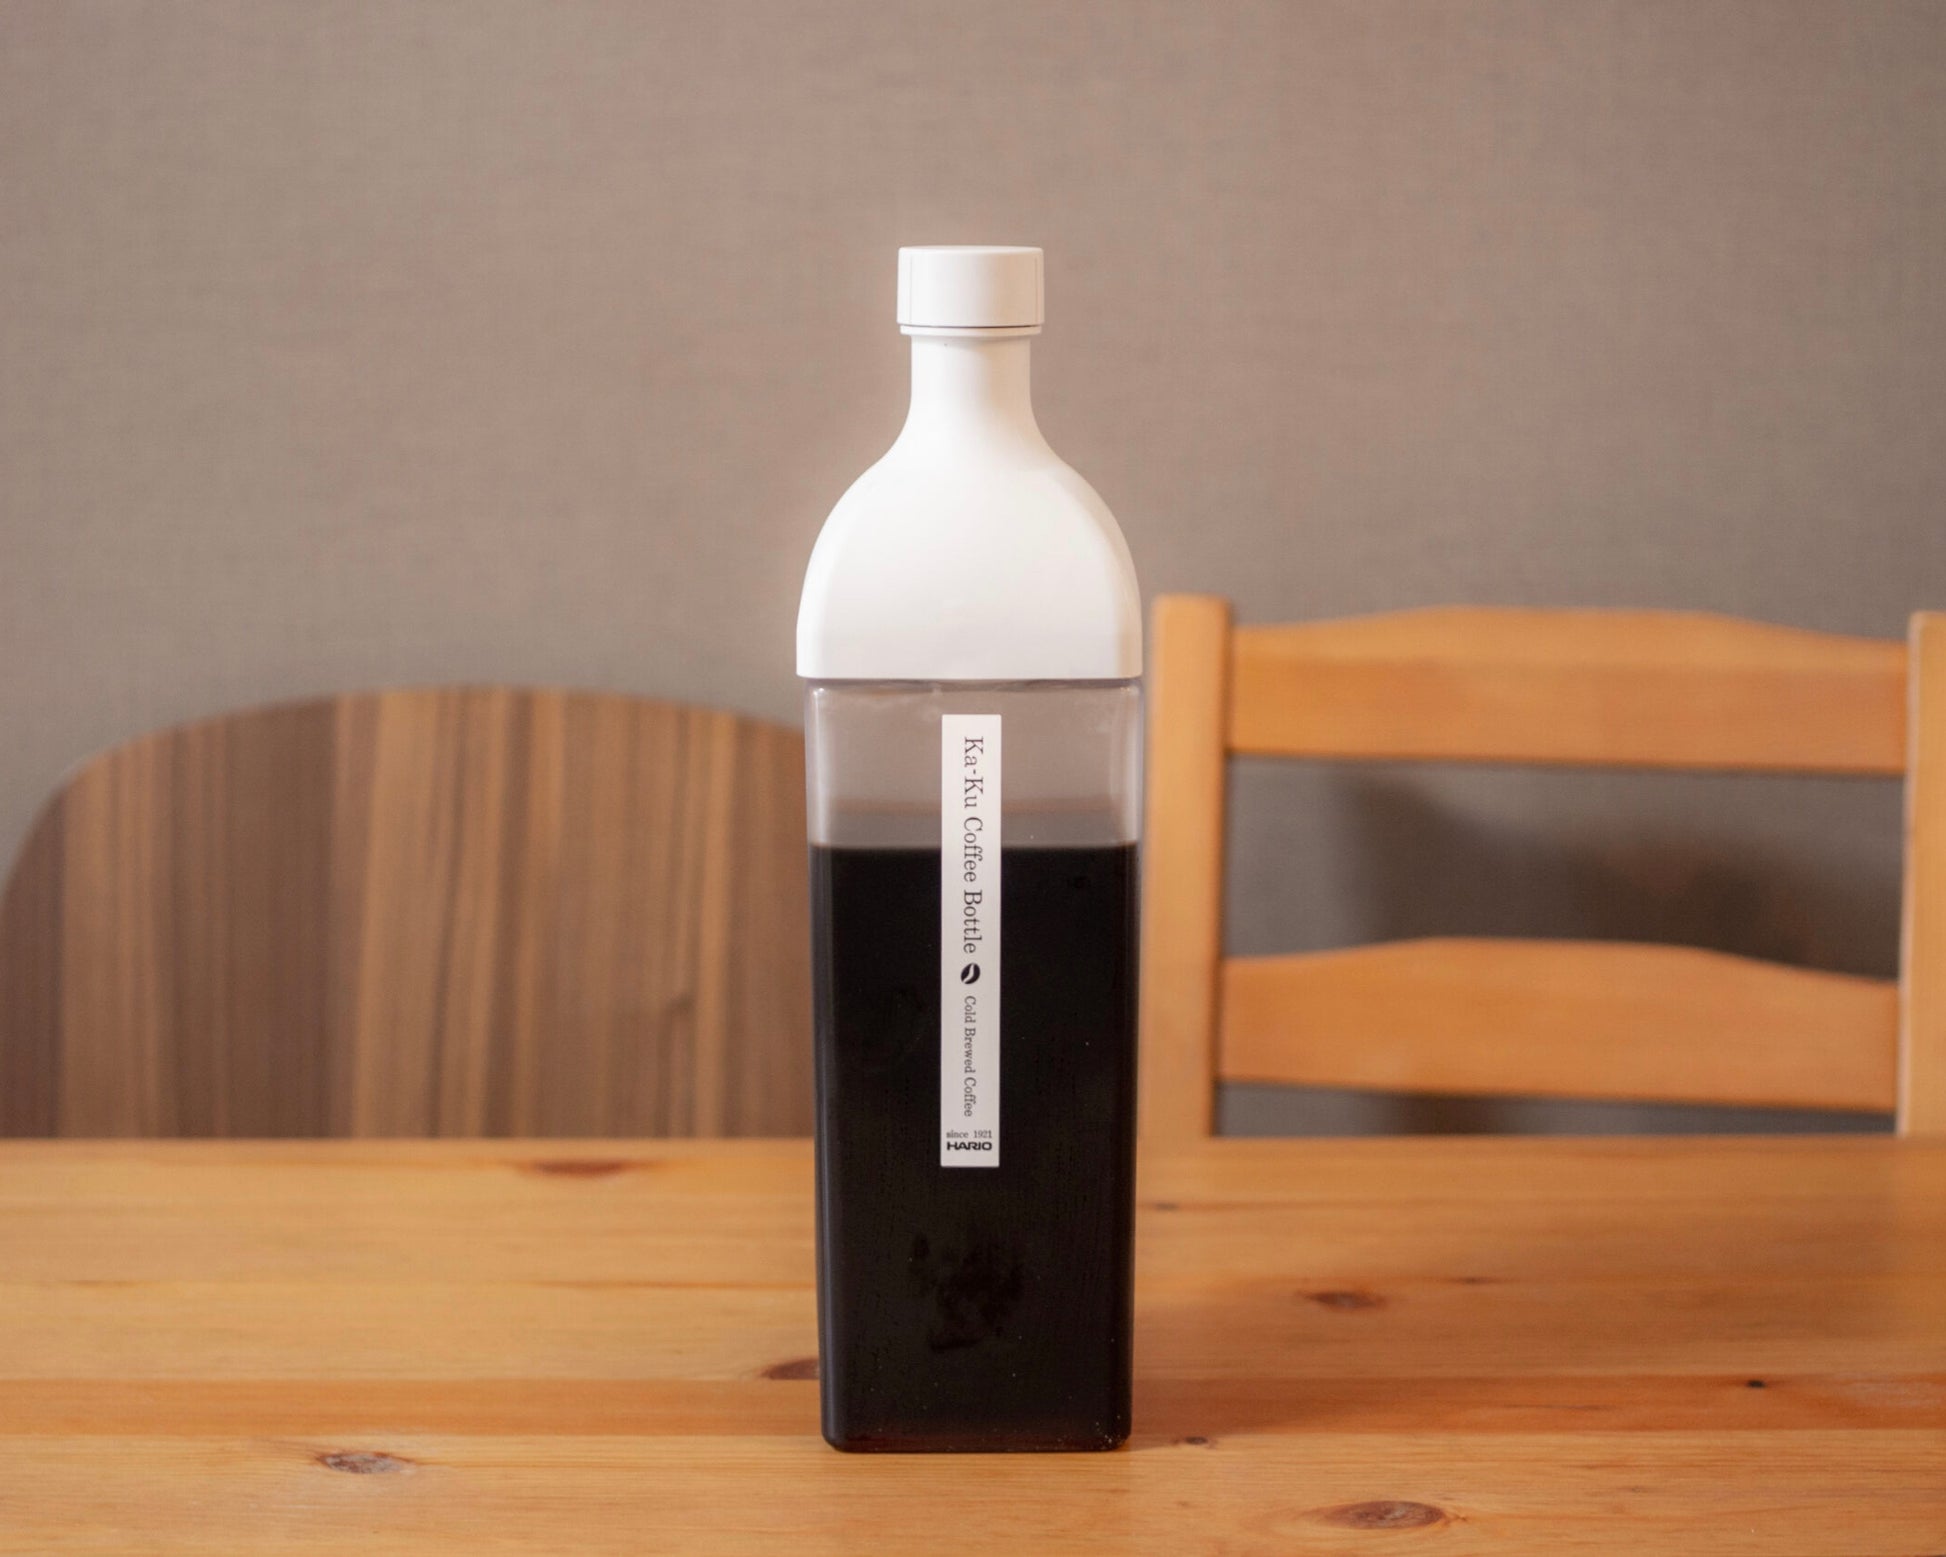 Hario V60 Cold Brew Filter-in Coffee Bottle kaku lifestyle 3 3